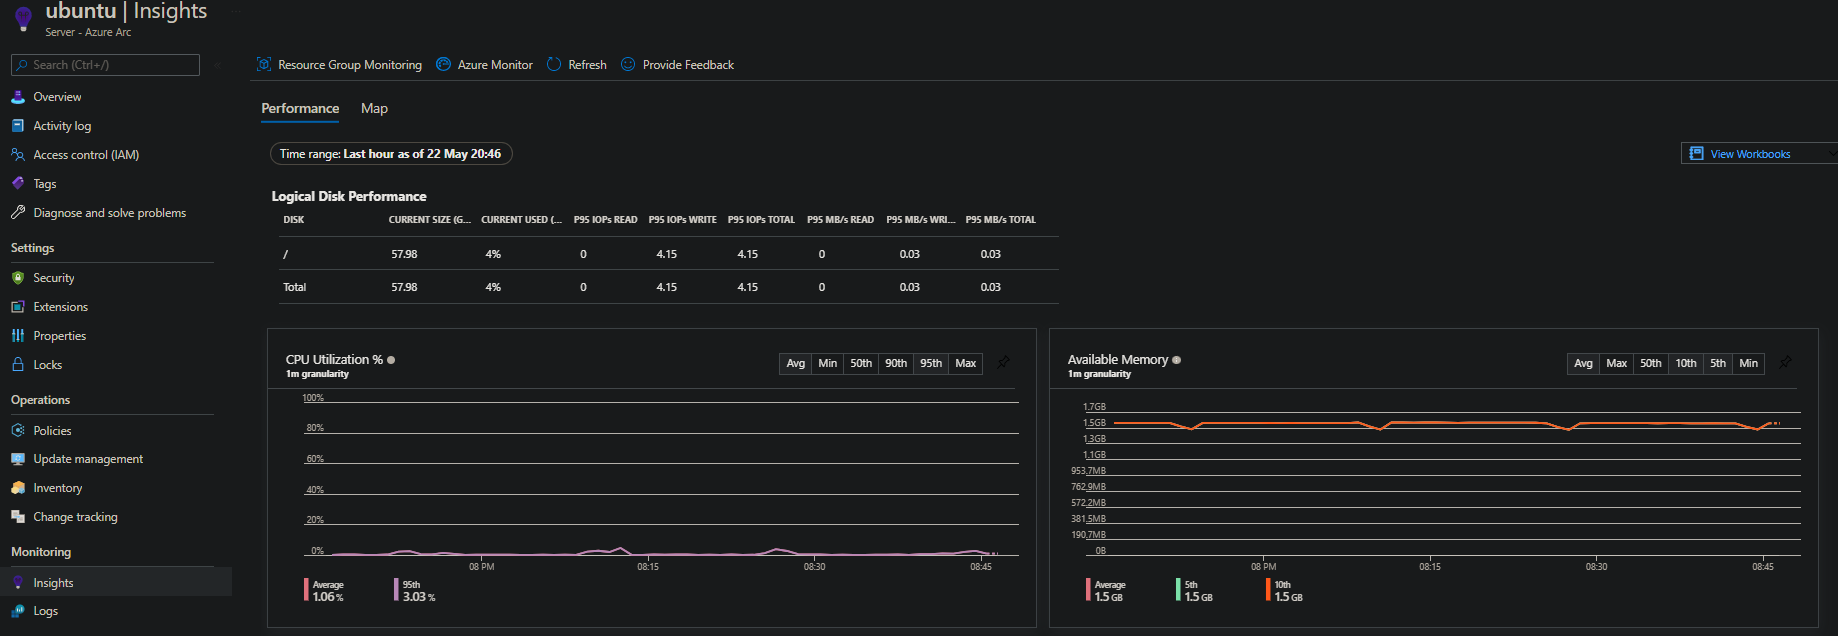 Azure Arc insights data display